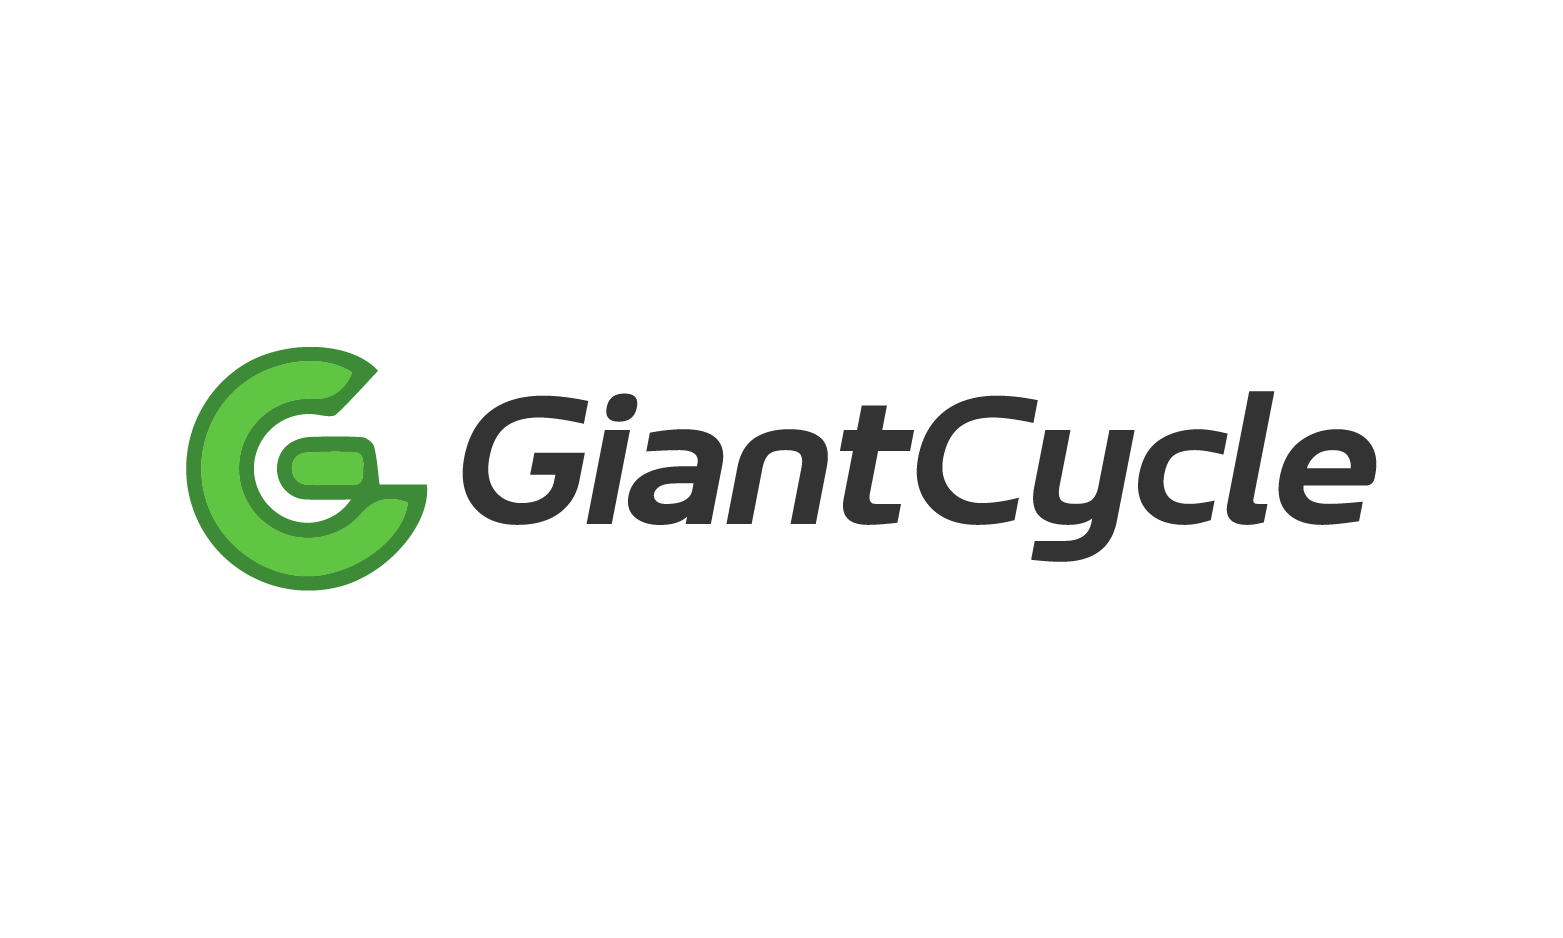 GiantCycle.com - Creative brandable domain for sale